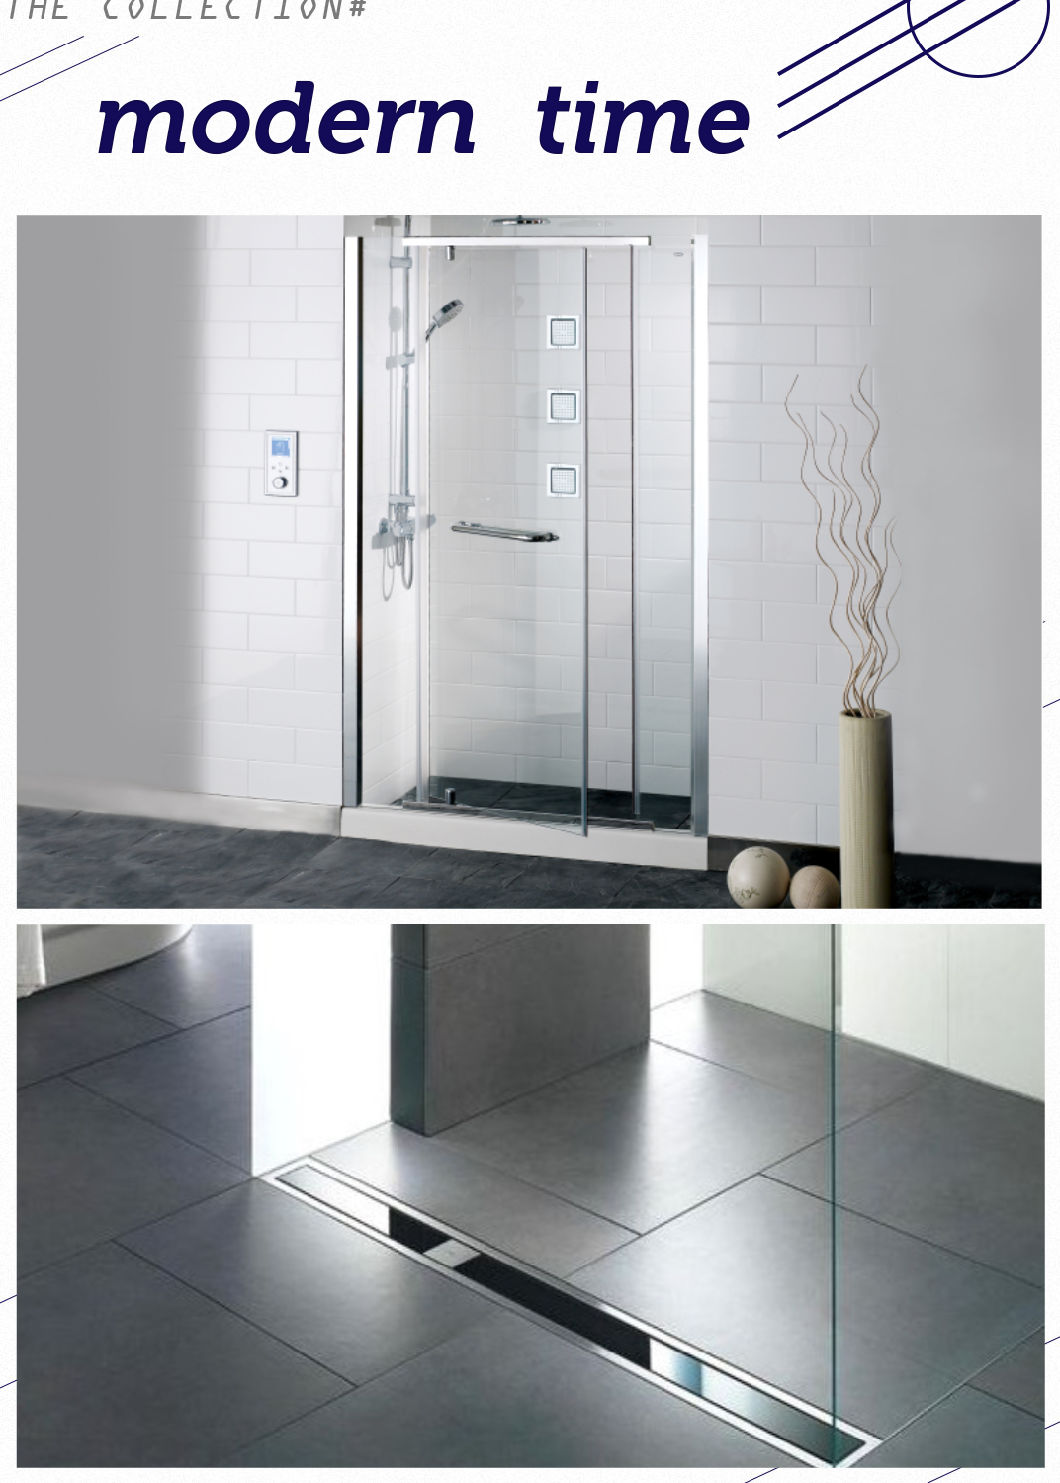 Stainless Steel 304 Flange Drain Body Linear Floor Drain for Bathroom